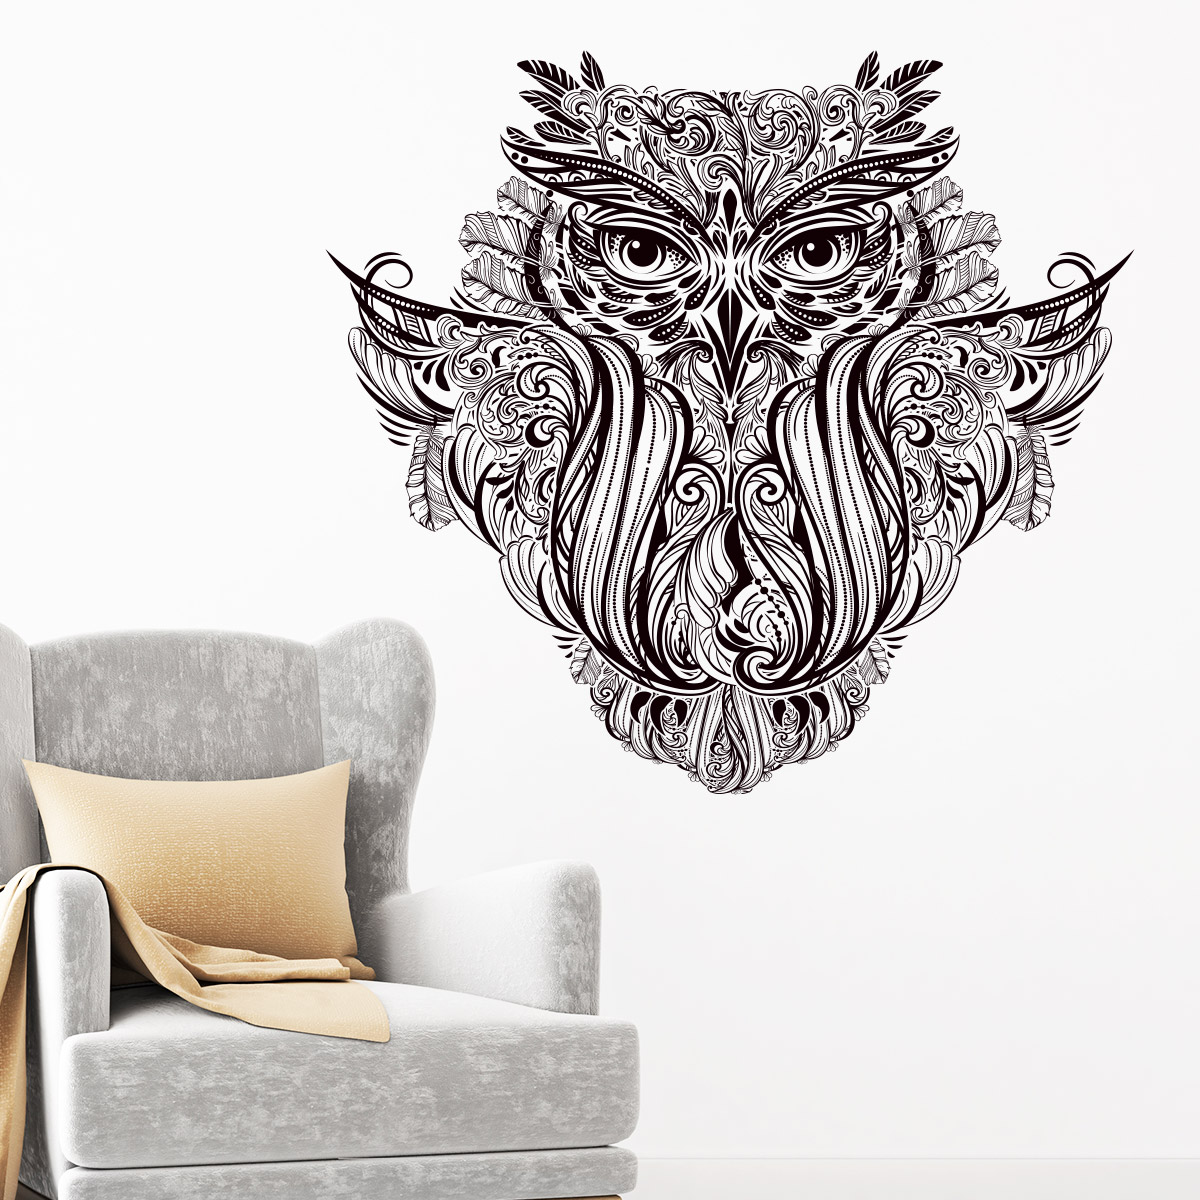 Wall decal boho owl